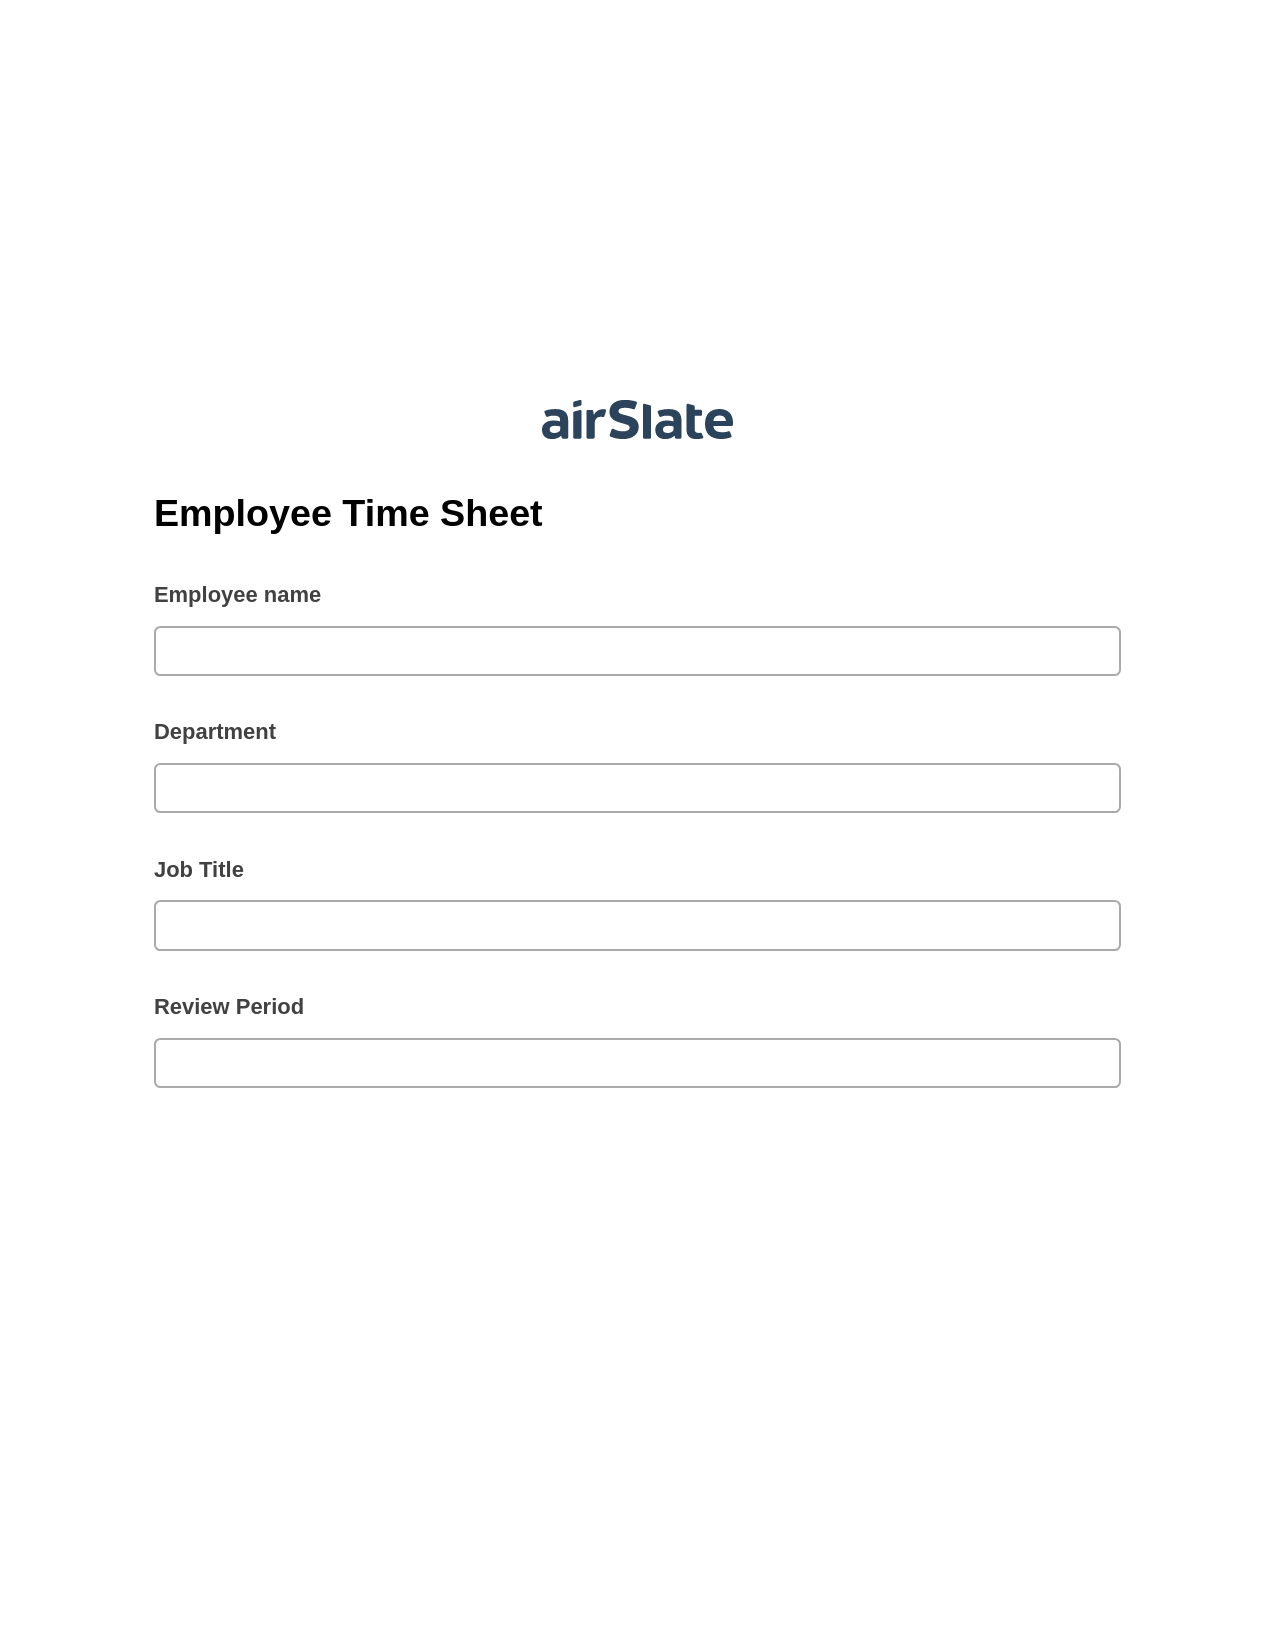 Employee Time Sheet Pre-fill Document Bot, Create Salesforce Records Bot, Webhook Postfinish Bot